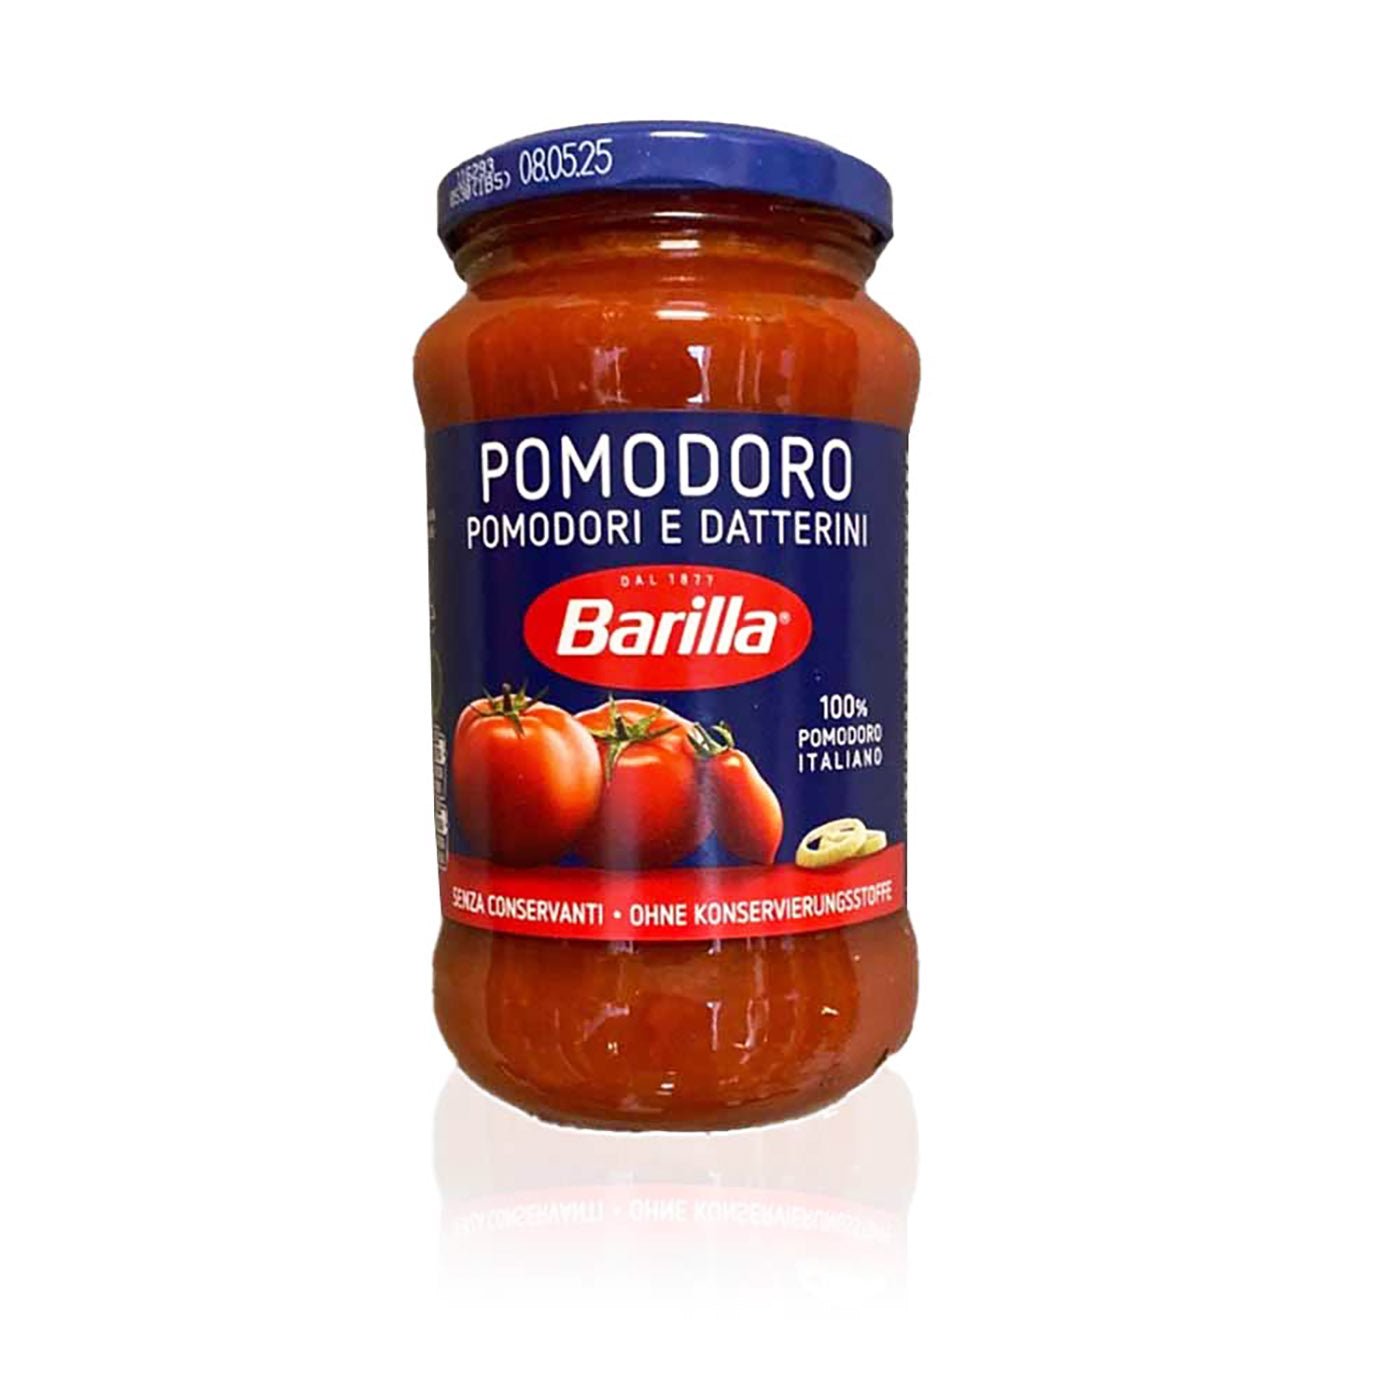 BARILLA - Pomodoro E Datterini - Tomatensauce - 0,4kg - italienisch - einkaufen.de